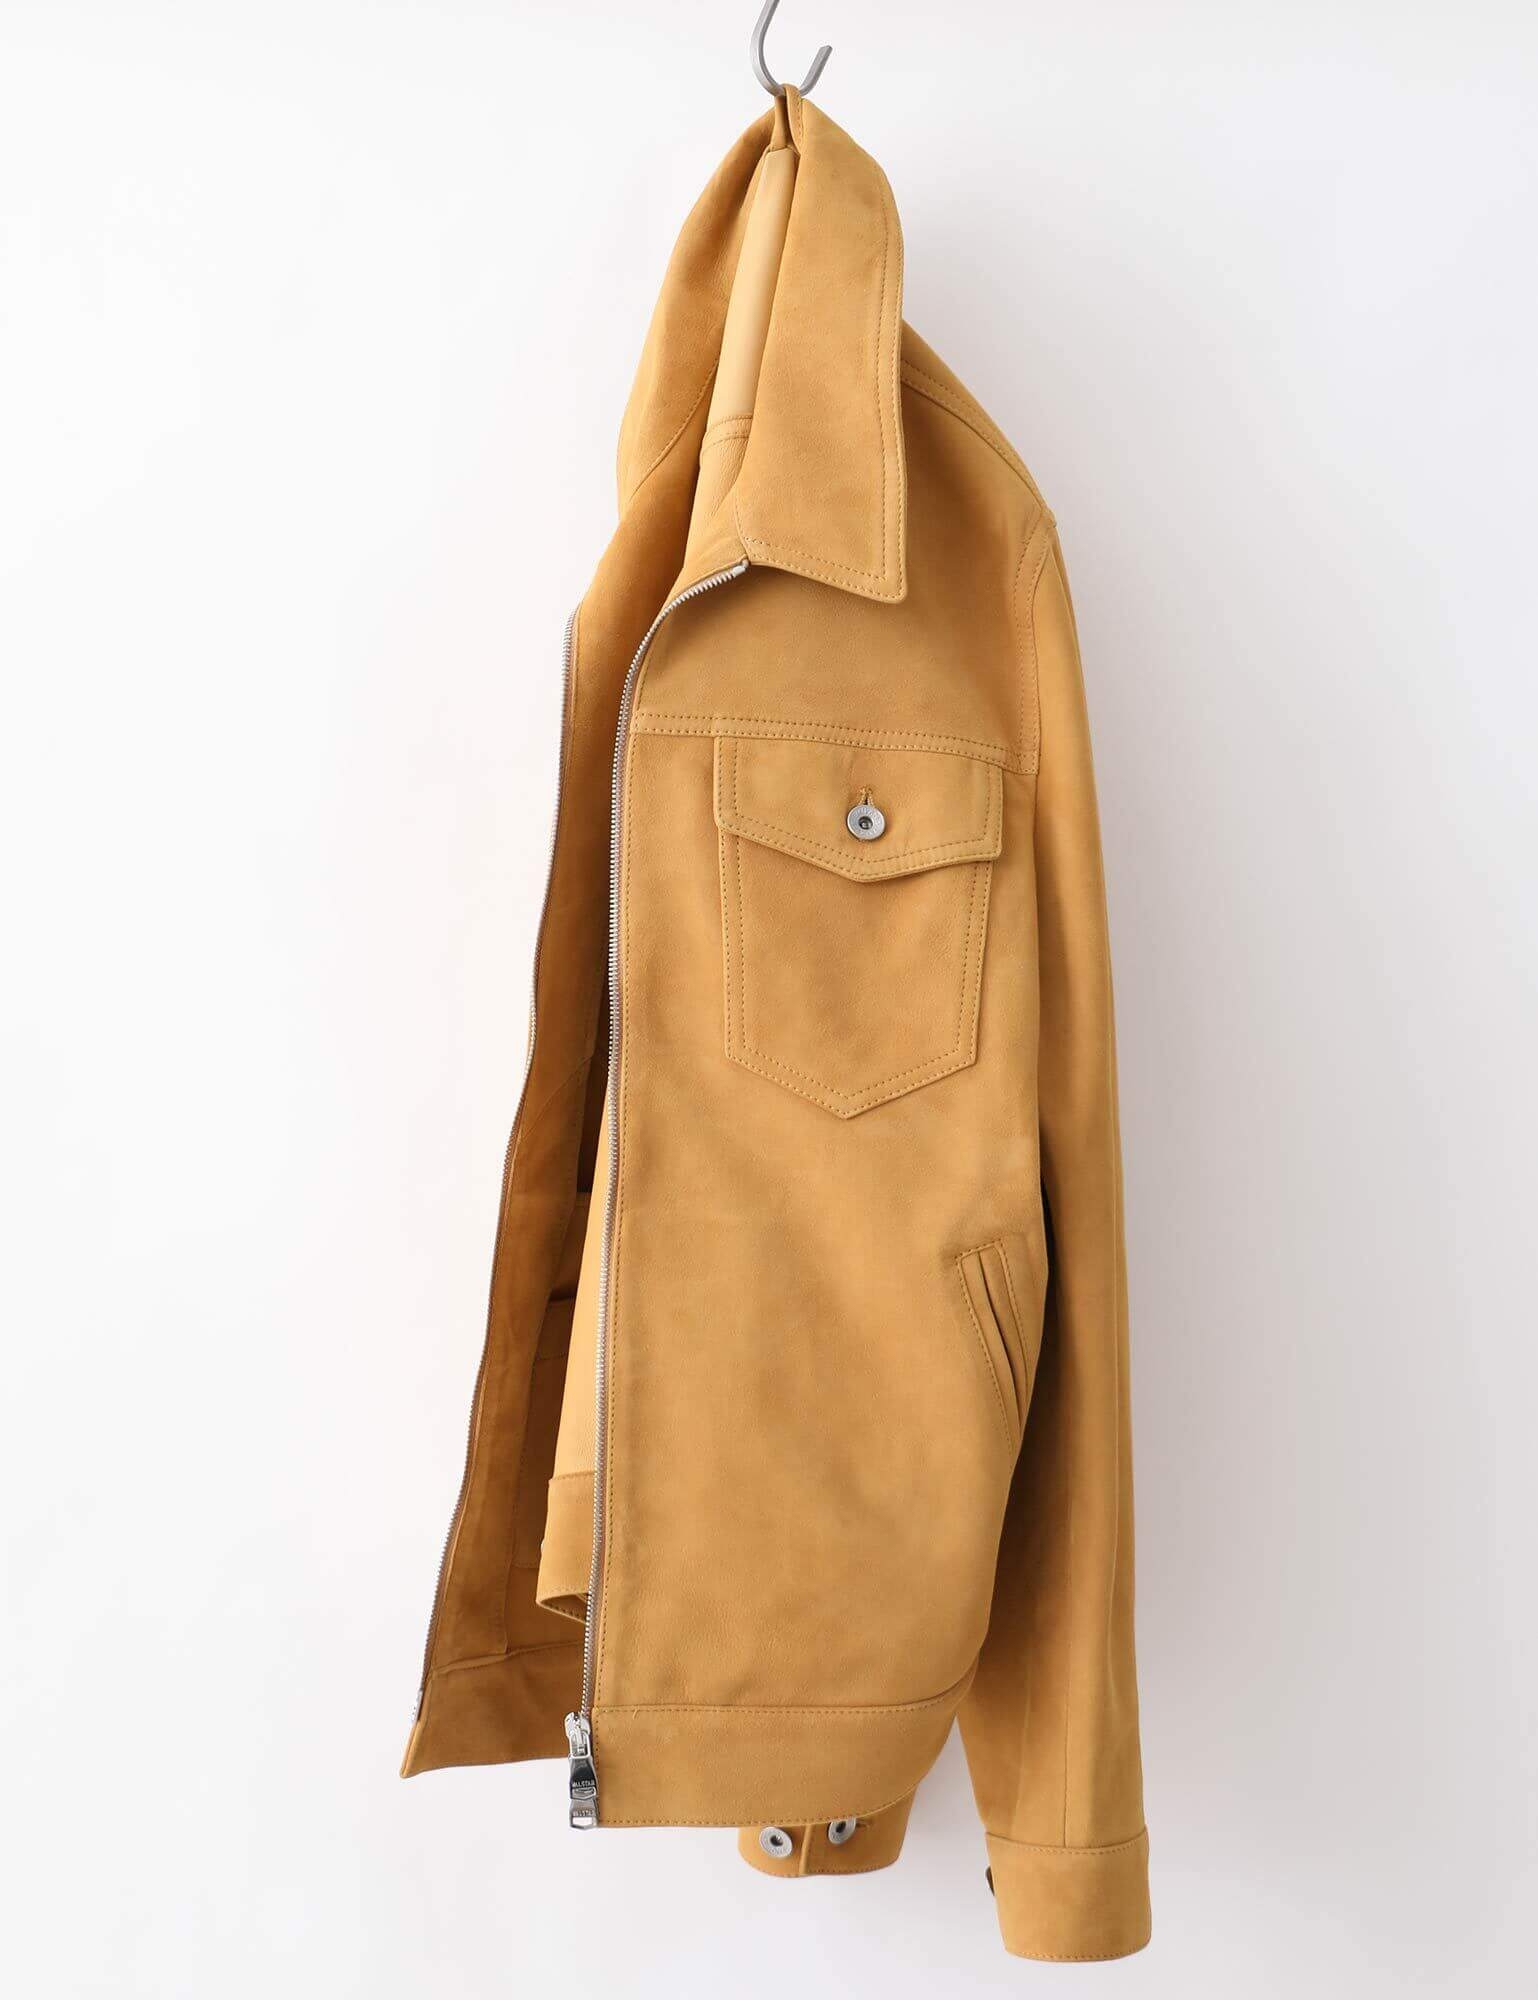 A suede Valstar Milano jacket hanging on a hook